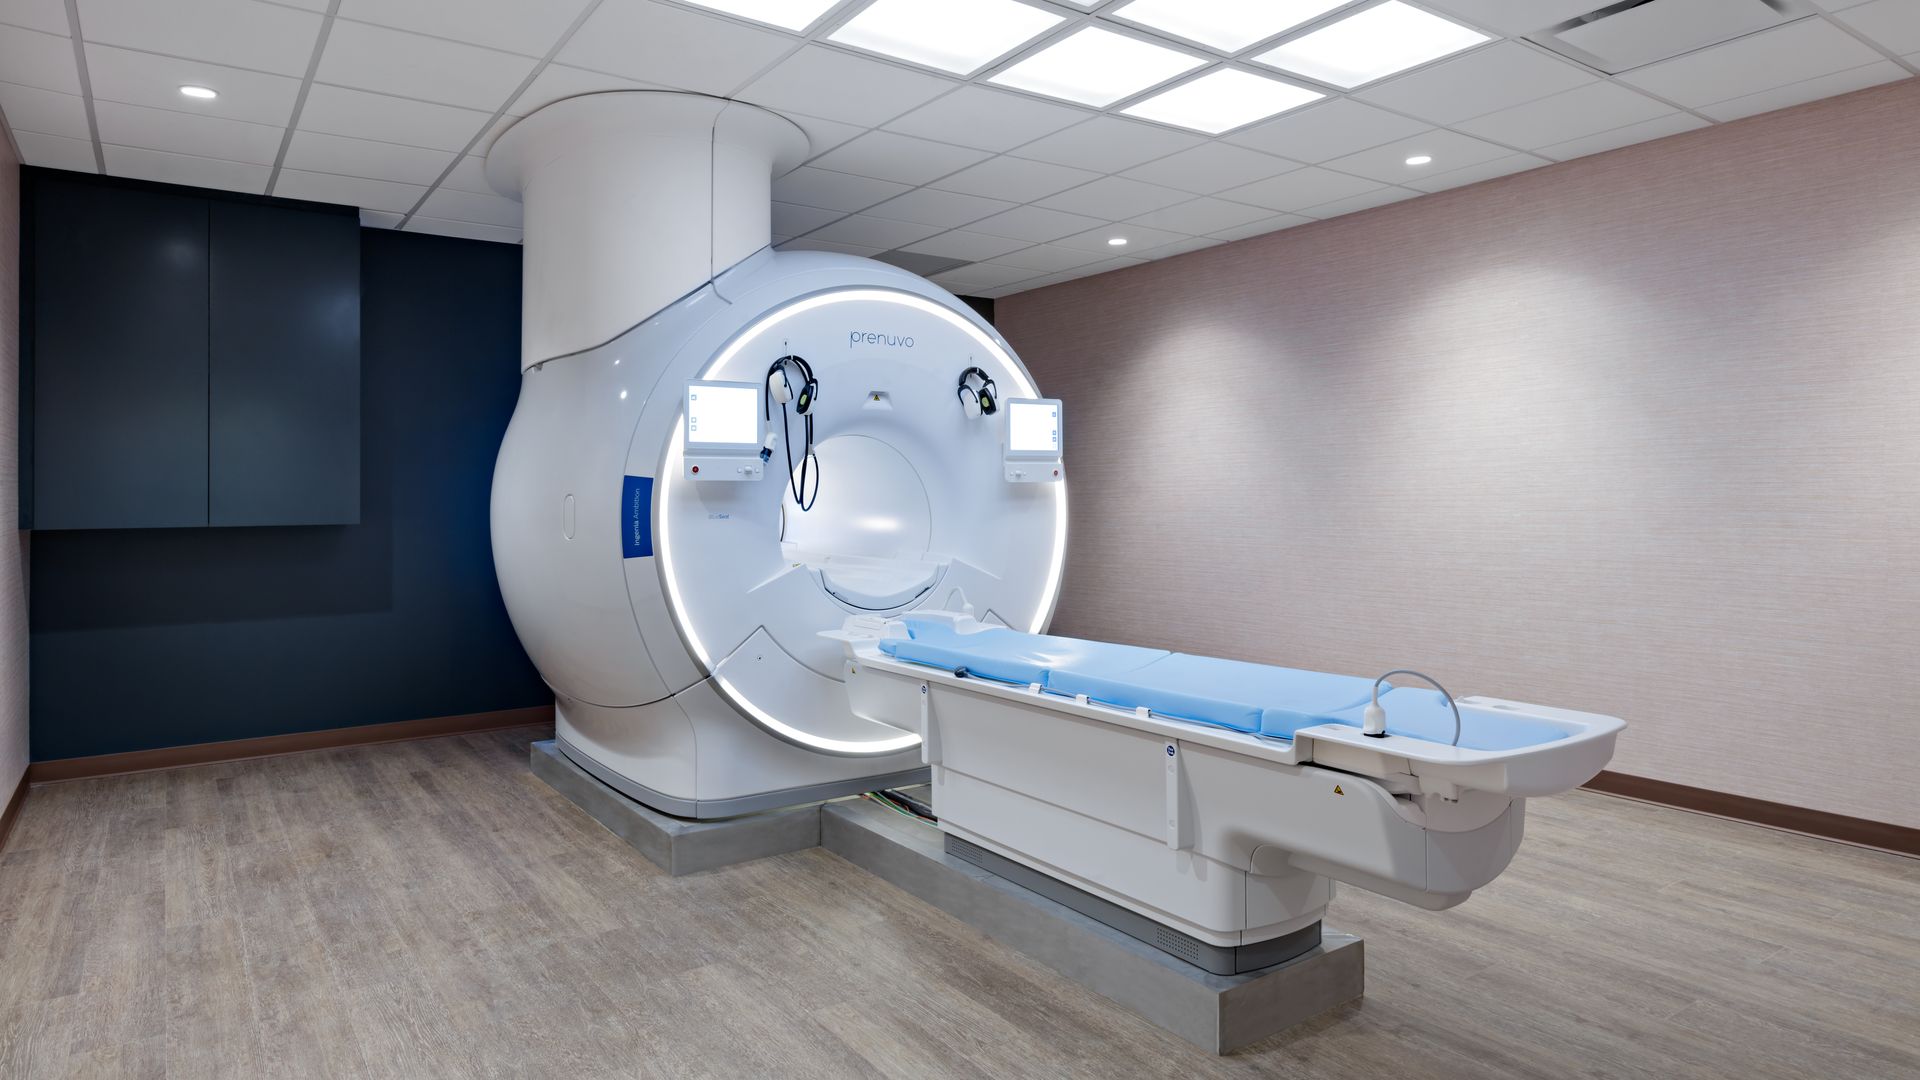 An image of Prenuvo's MRI machine in a treatment room.